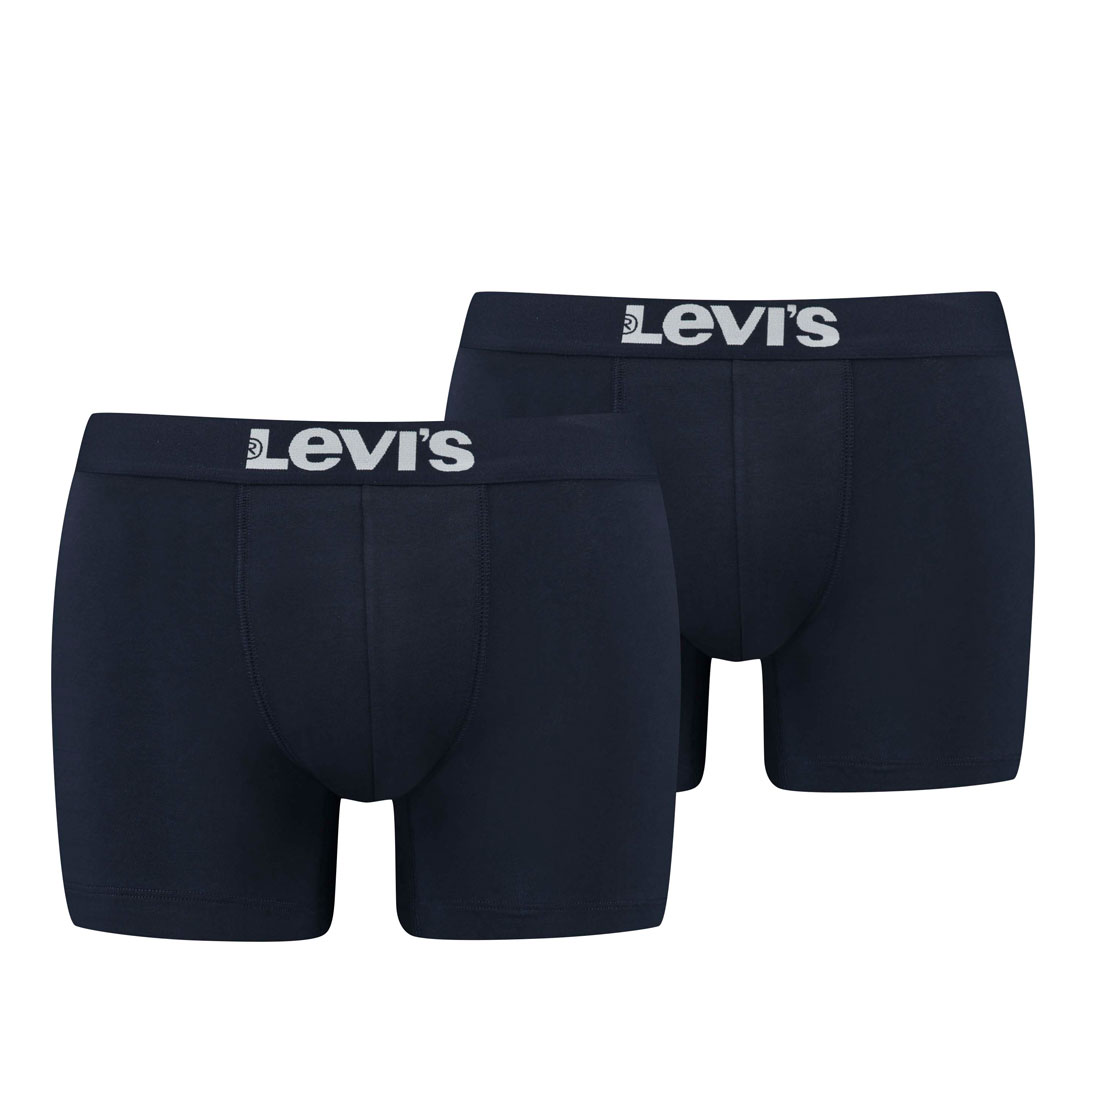 Levi's Herren Levis Men SOLID Basic Boxer 2P Boxershorts, Blau (Navy 321), Small (Herstellergröße: 010) (2er Pack)